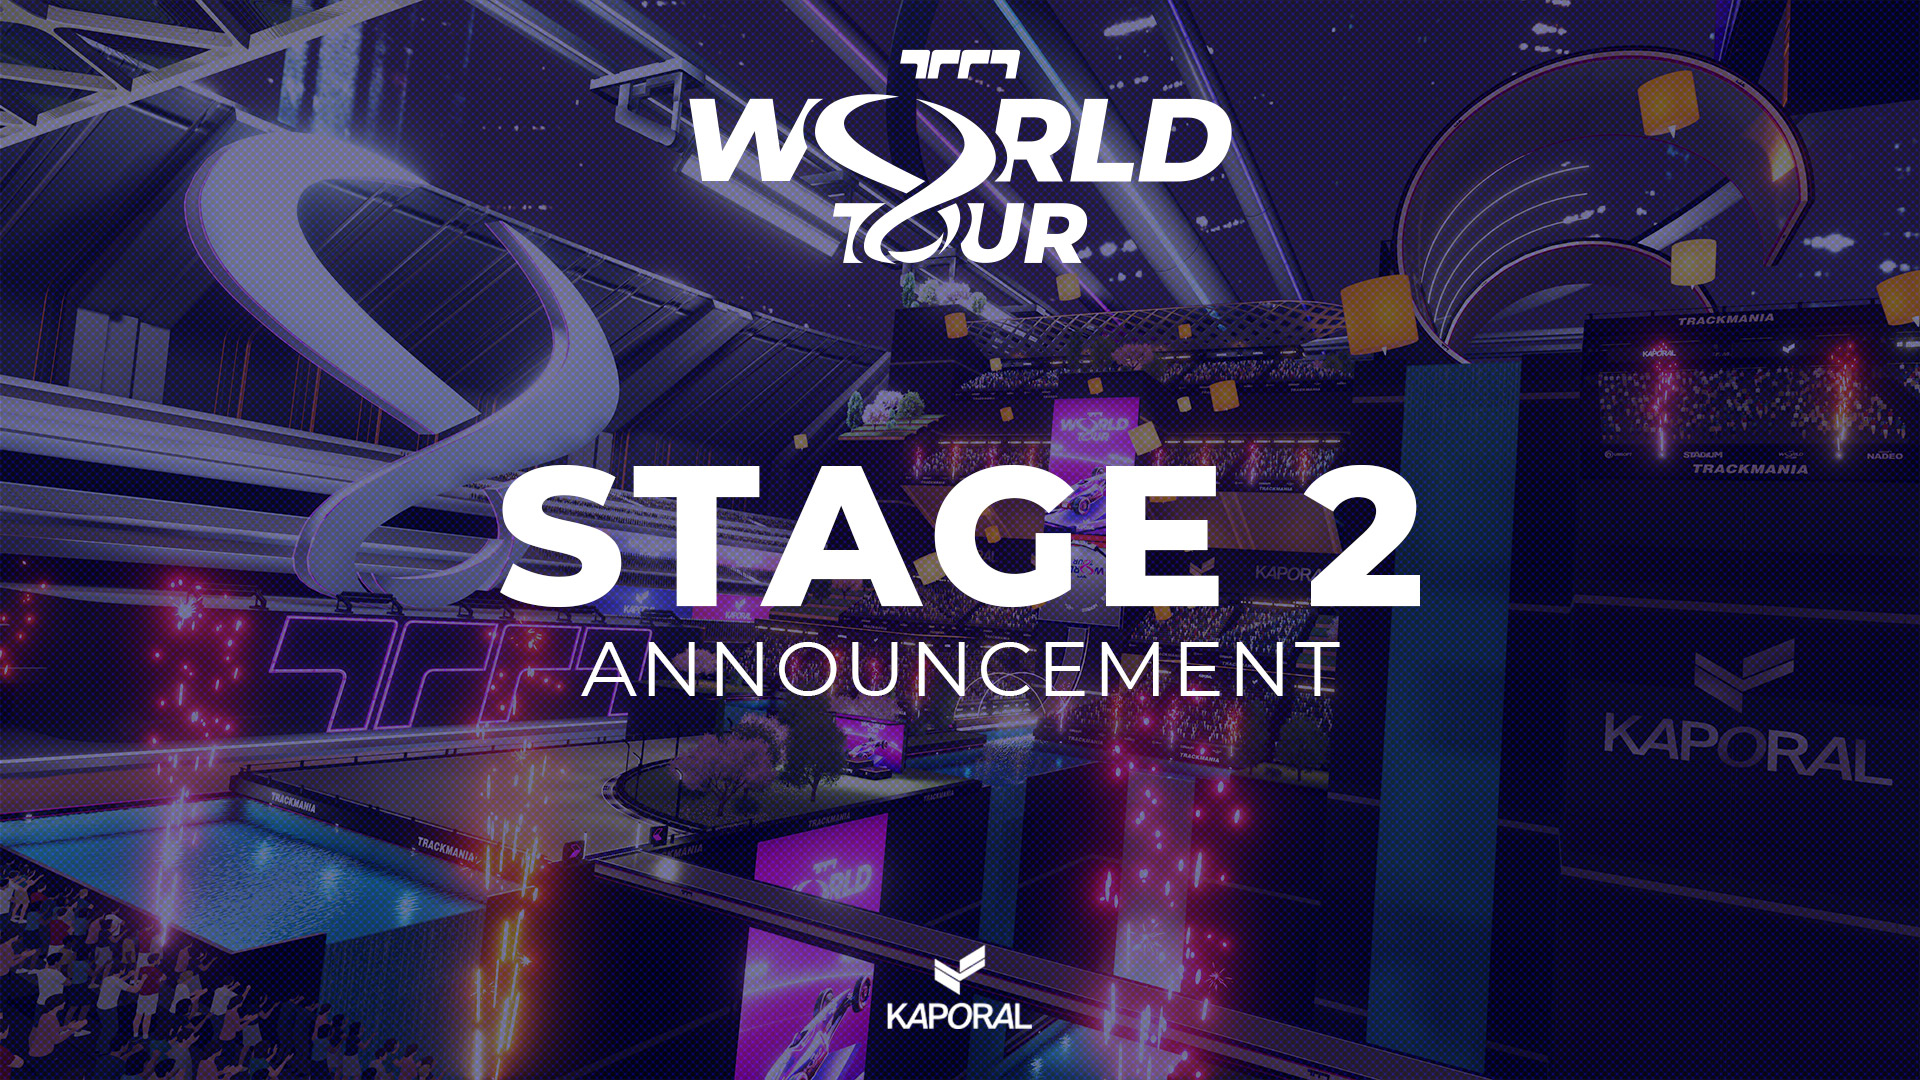 Trackmania World Tour Stage 2 schedule